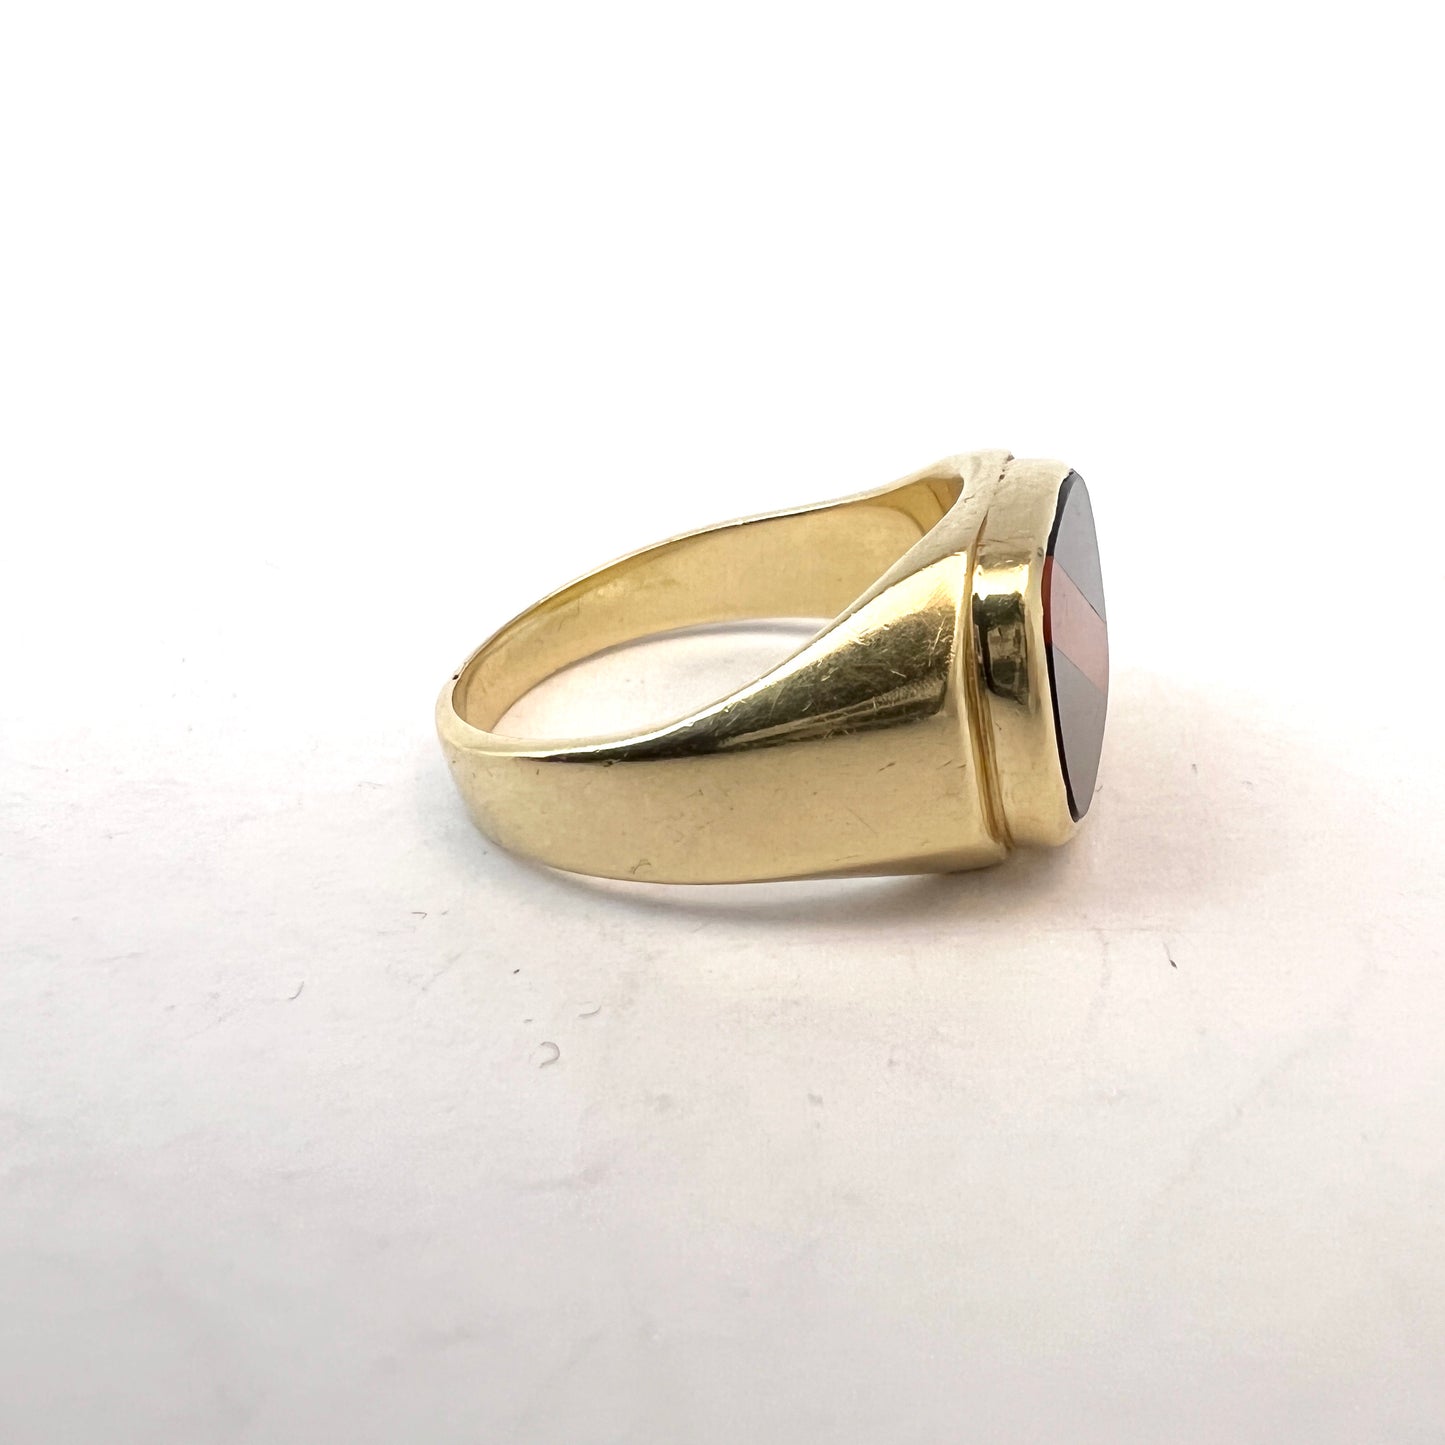 Maker RN, Continental Europe 1940-50s. Vintage 14k Gold Onyx Jasper Signet Ring.